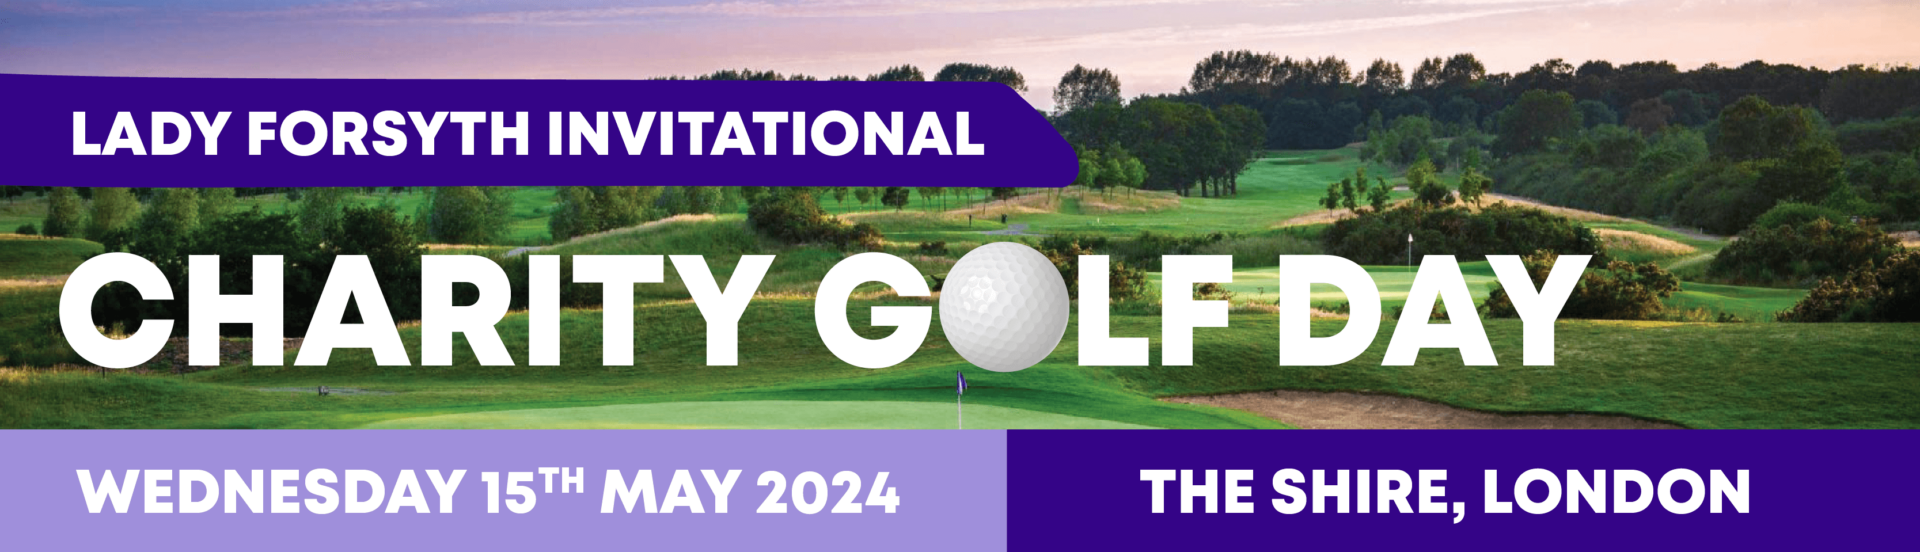 Lady Forsyth Invitational Charity Golf Day